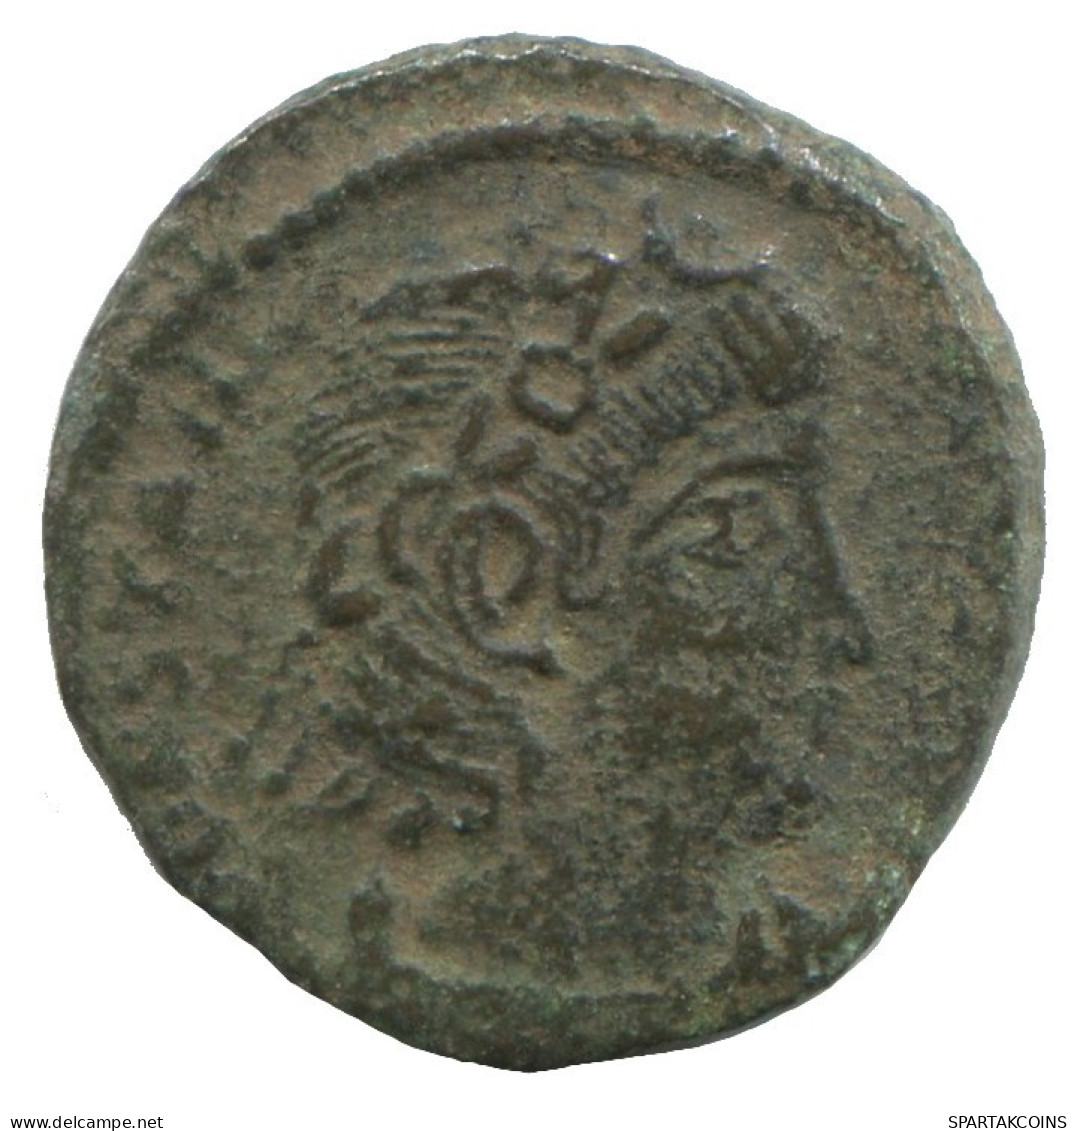 CONSTANS ANTIOCH SMAN AD333-336 GLORIA EXERCITVS 1.5g/15mm #ANN1488.10.F.A - The Christian Empire (307 AD To 363 AD)